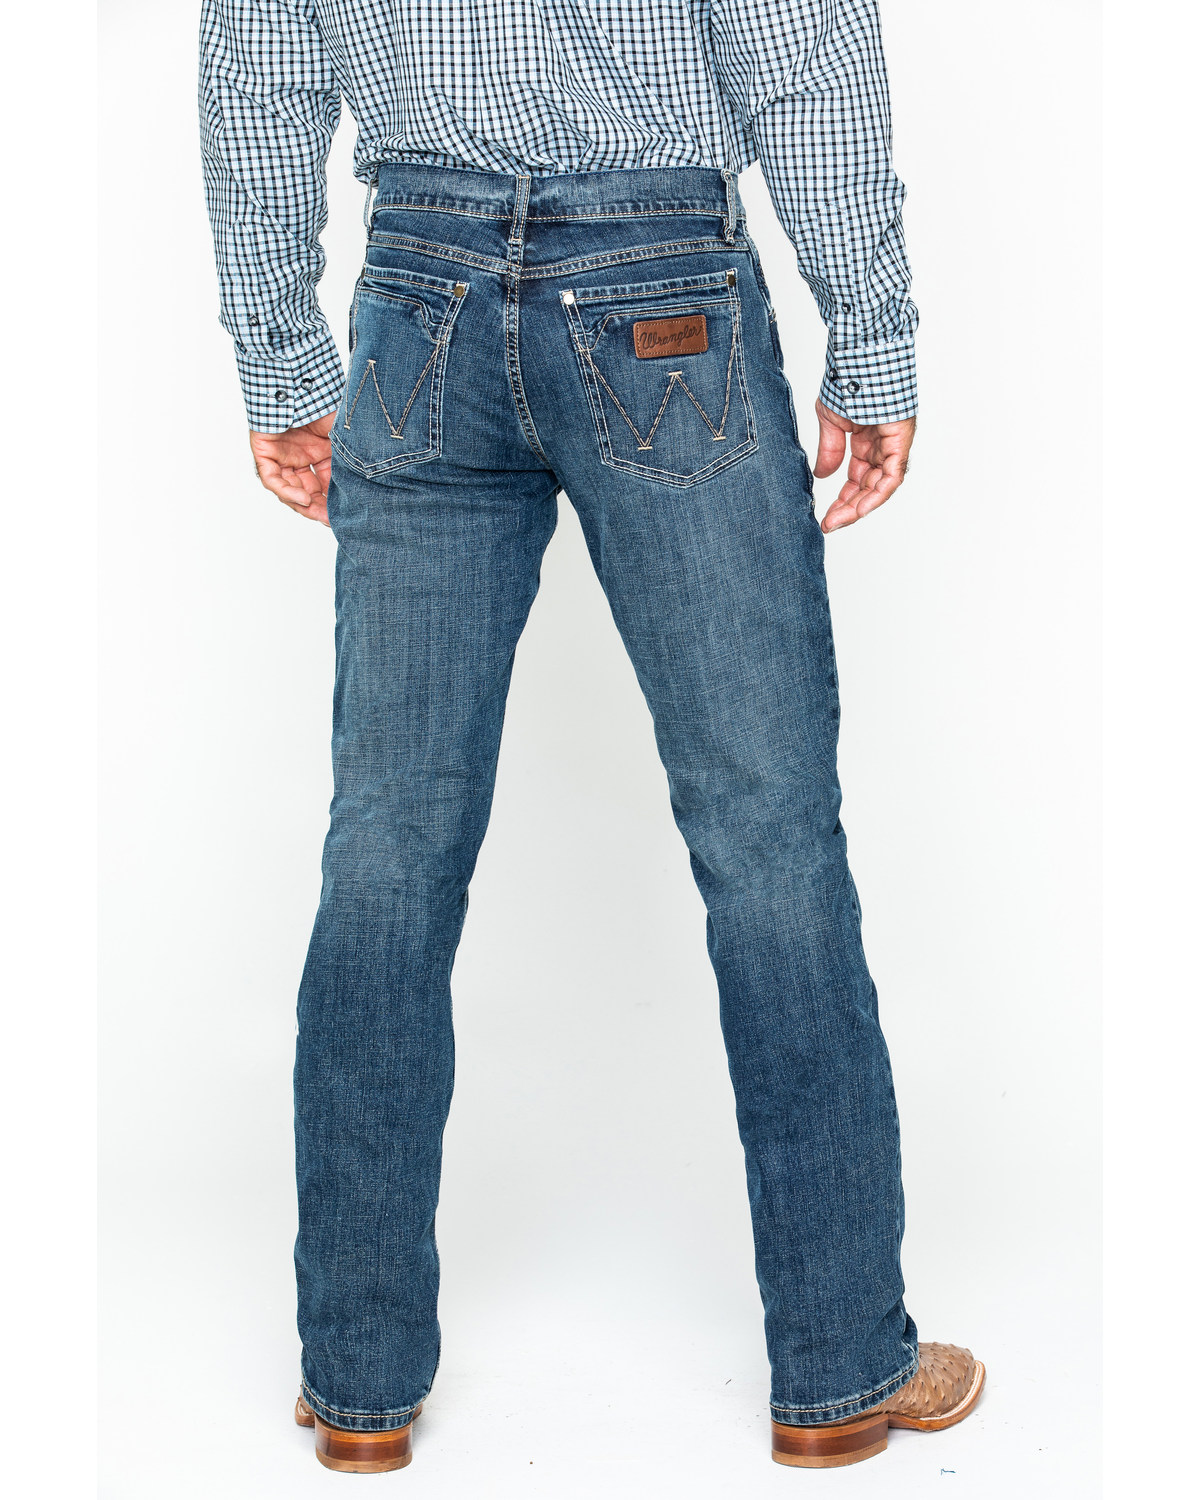 amplitude Appraisal Walter Cunningham wrangler denim jeans Kilometers ...